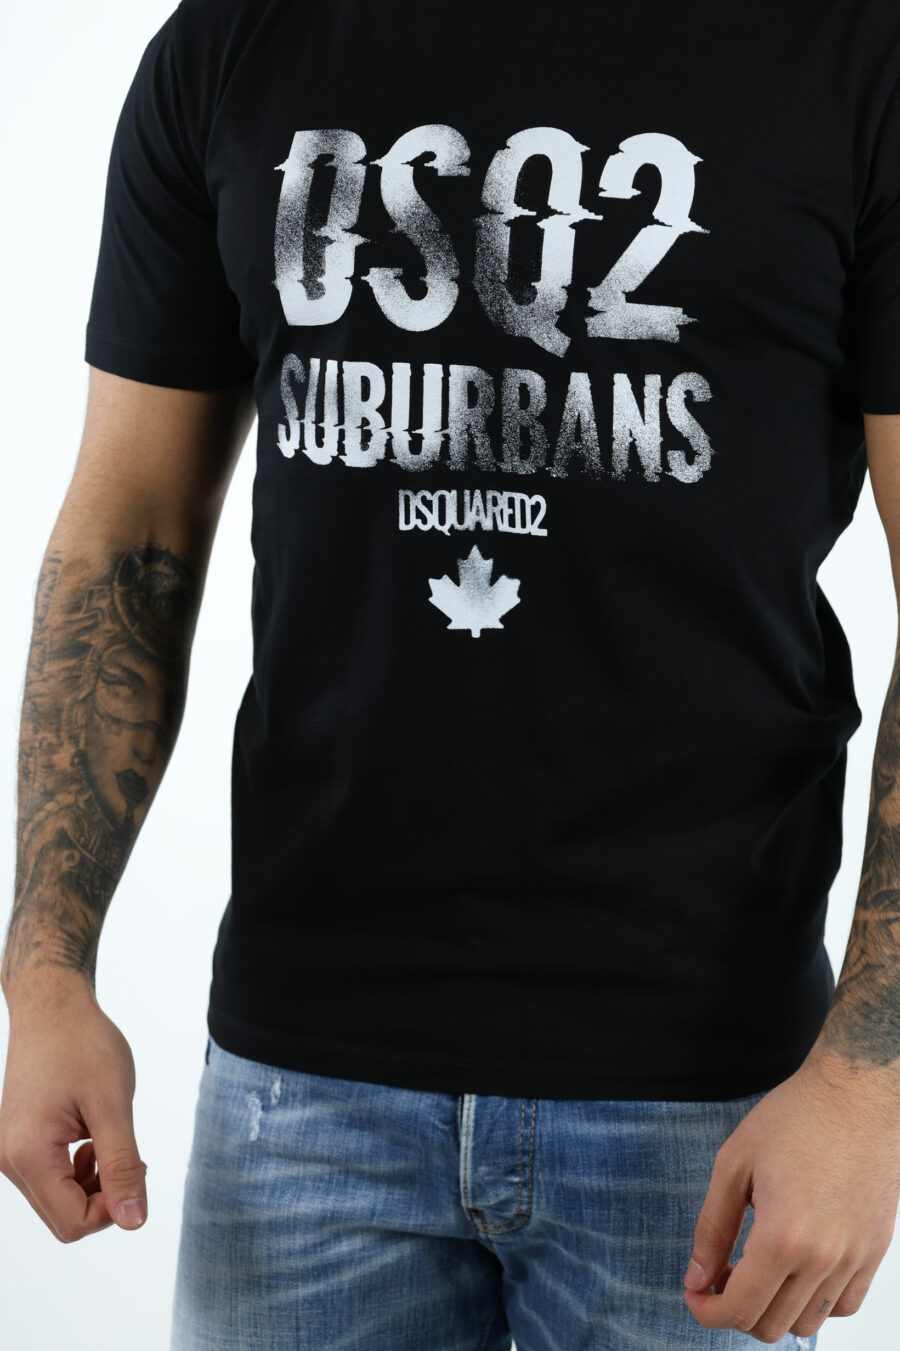 Camiseta negra con maxilogo "suburbans" blanco - 106889